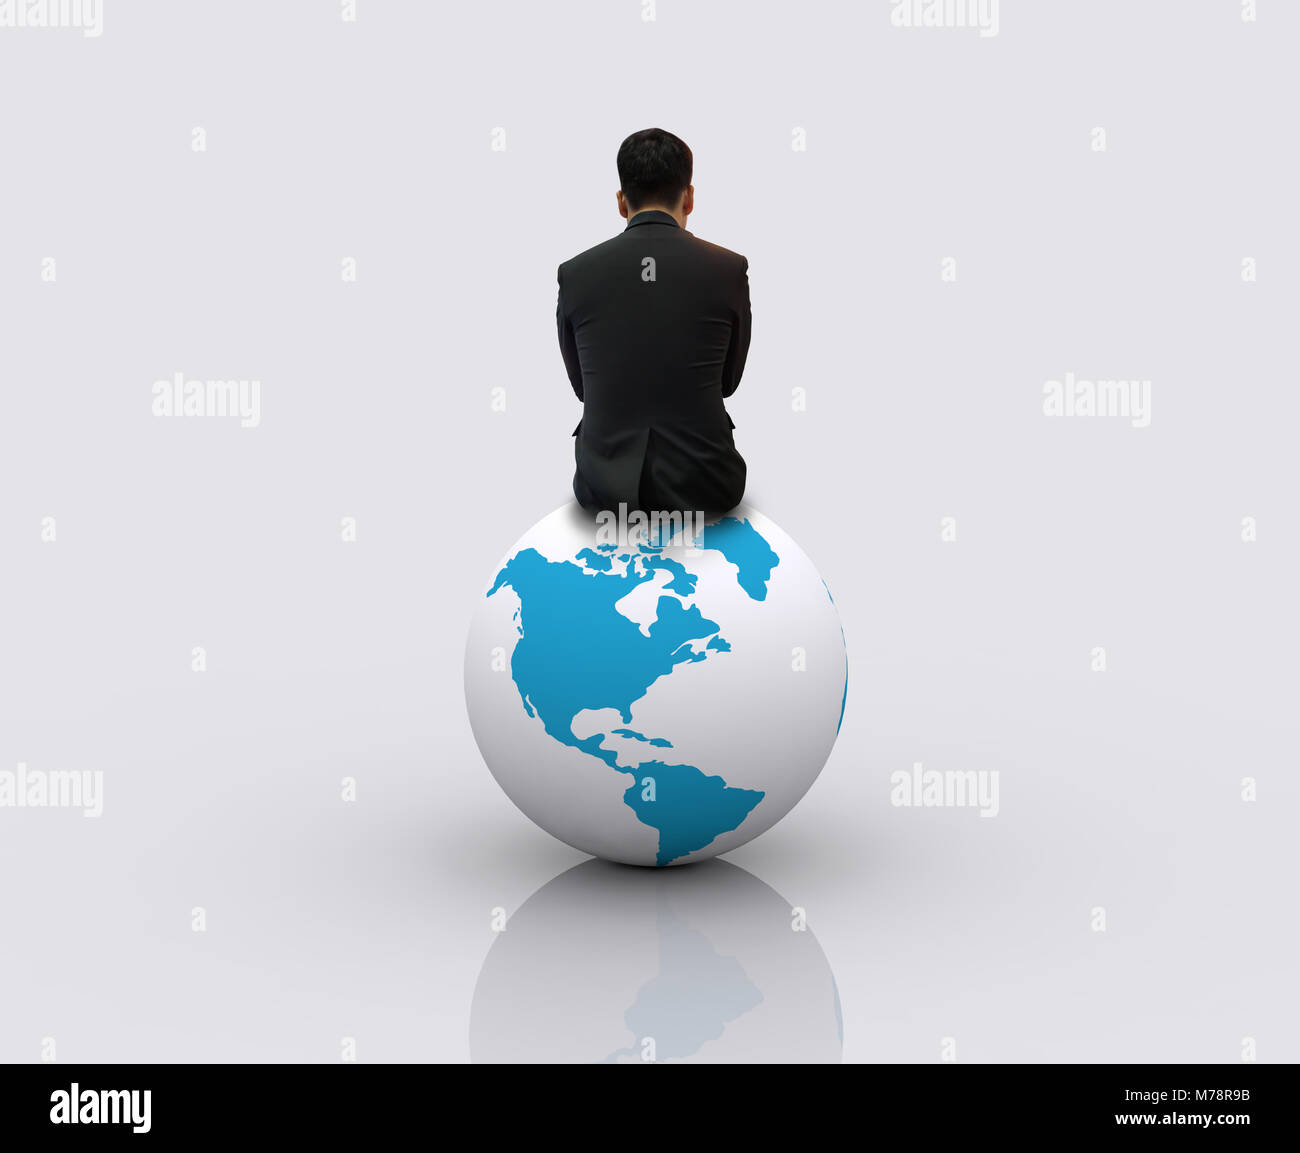 Businessman sitting on the globe Stock Photo